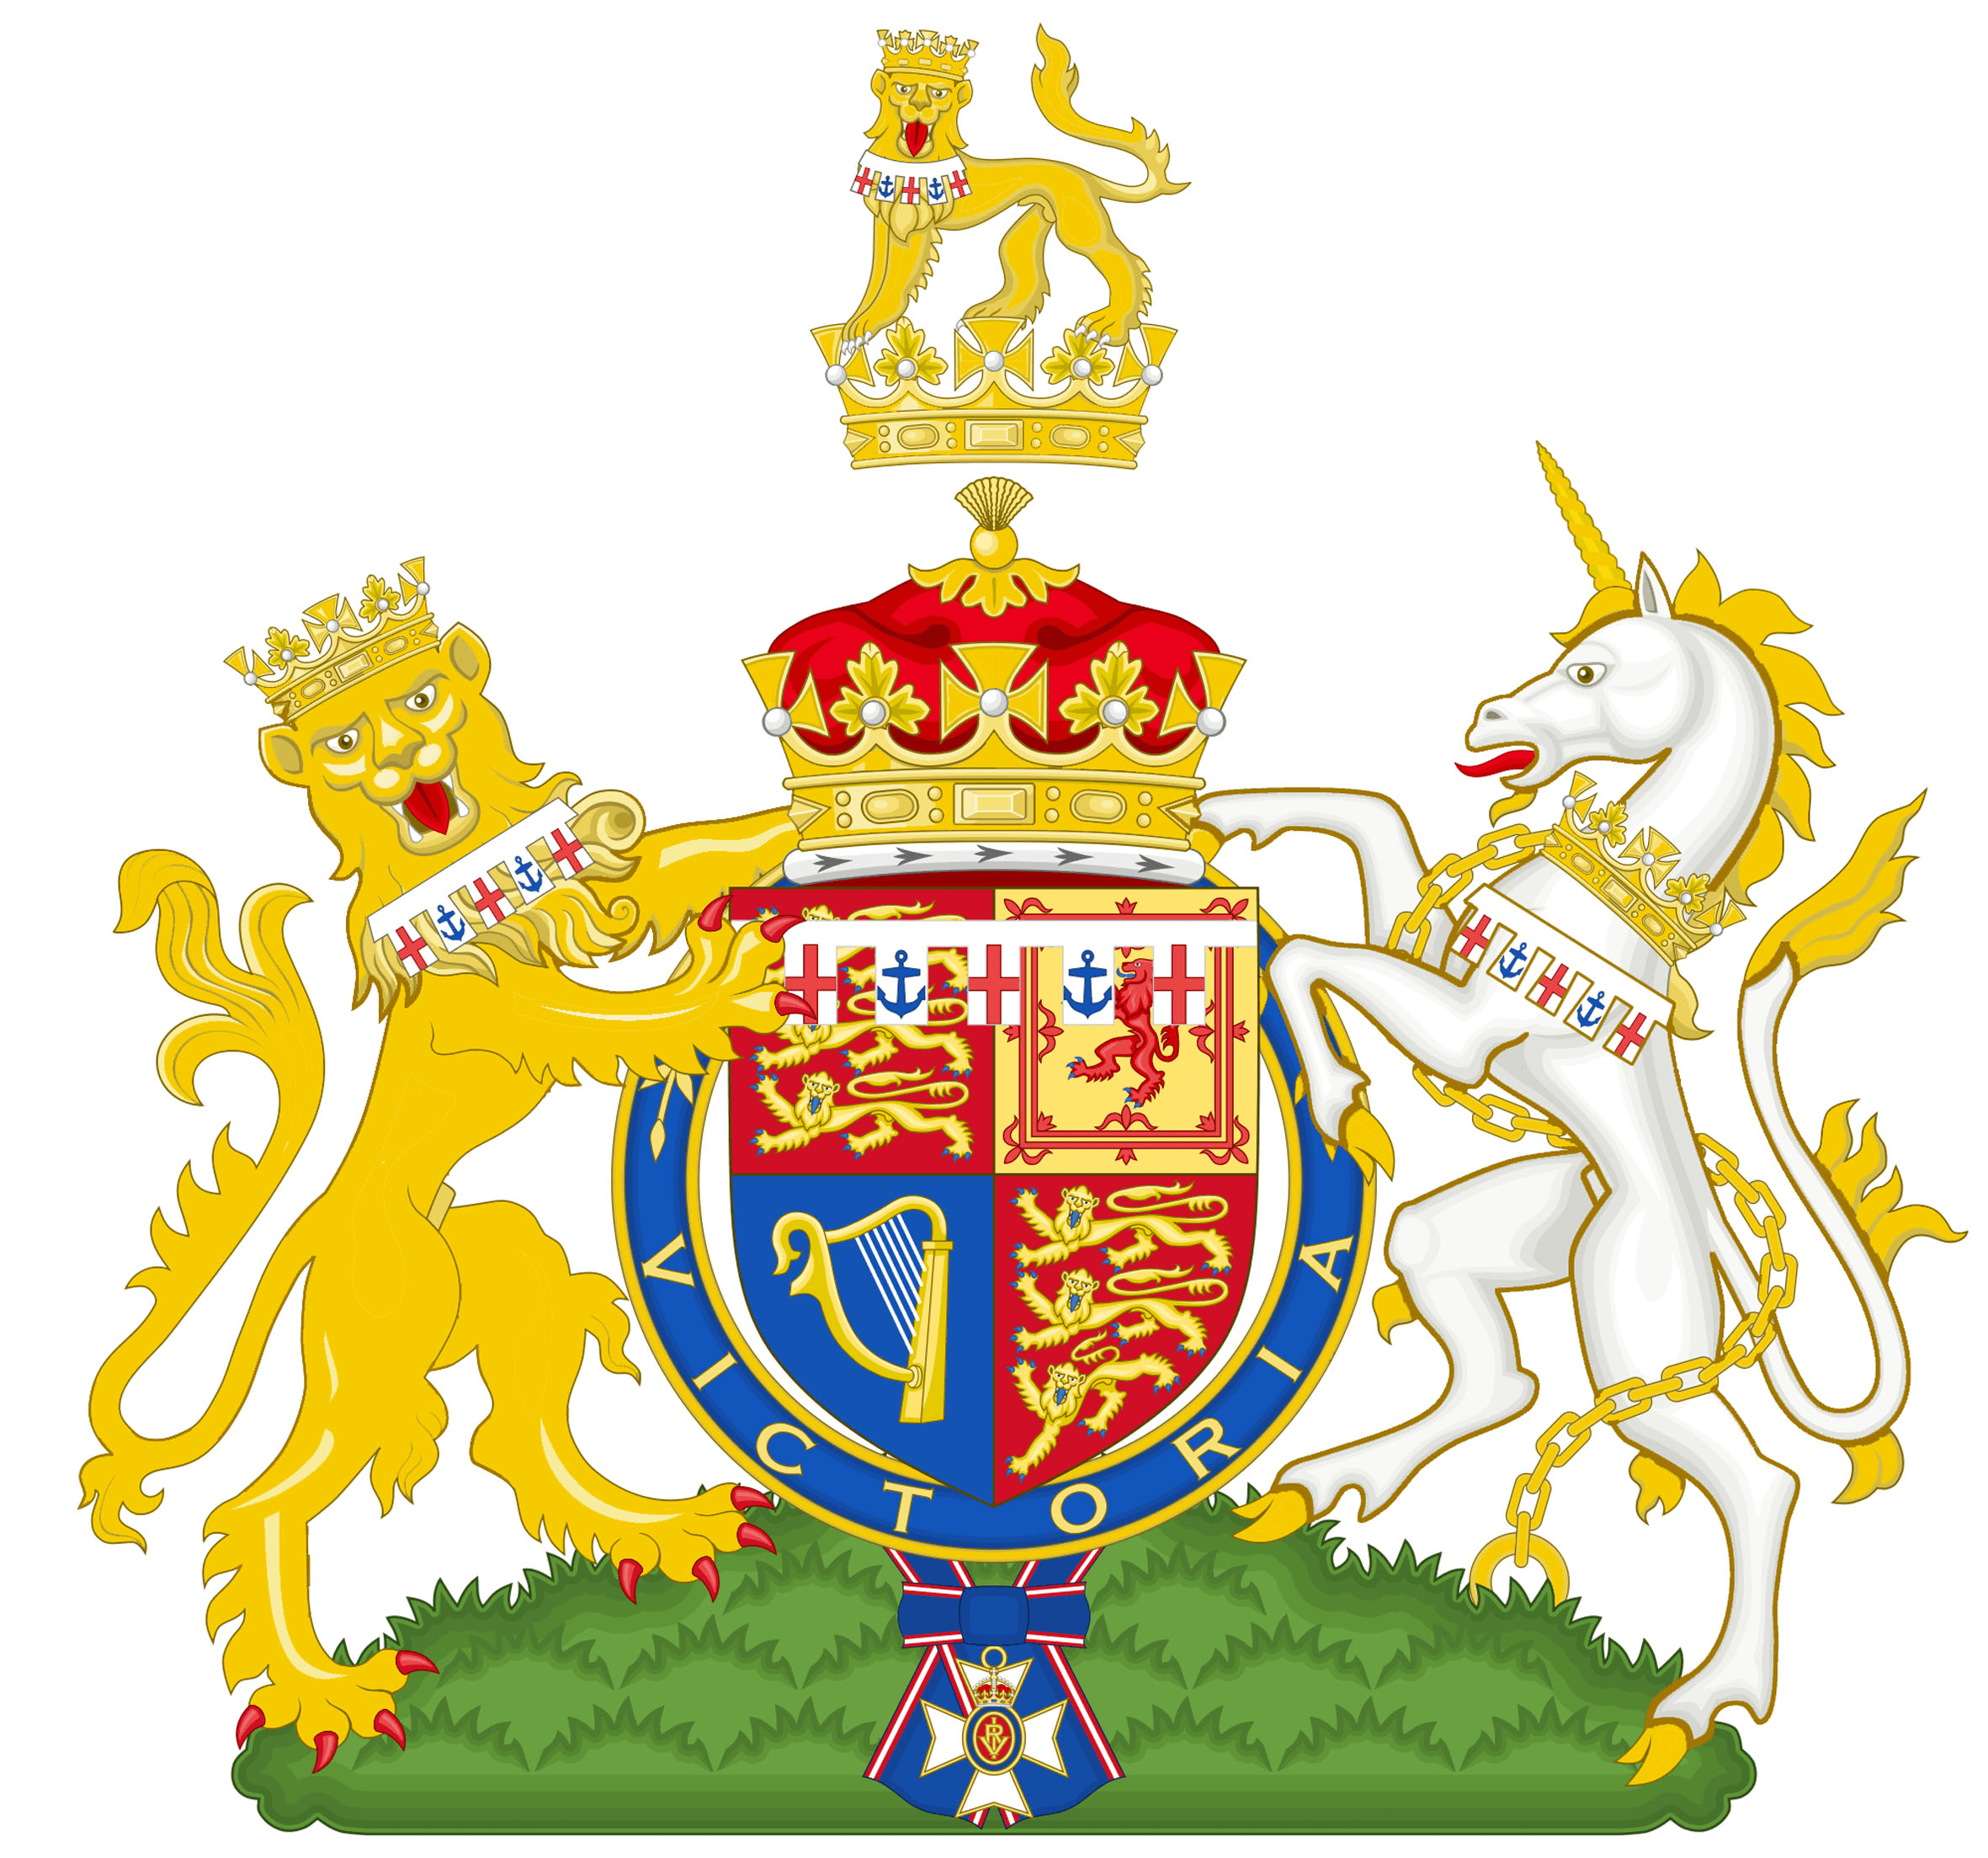 Prince Michael of Kent, Crest / Logo